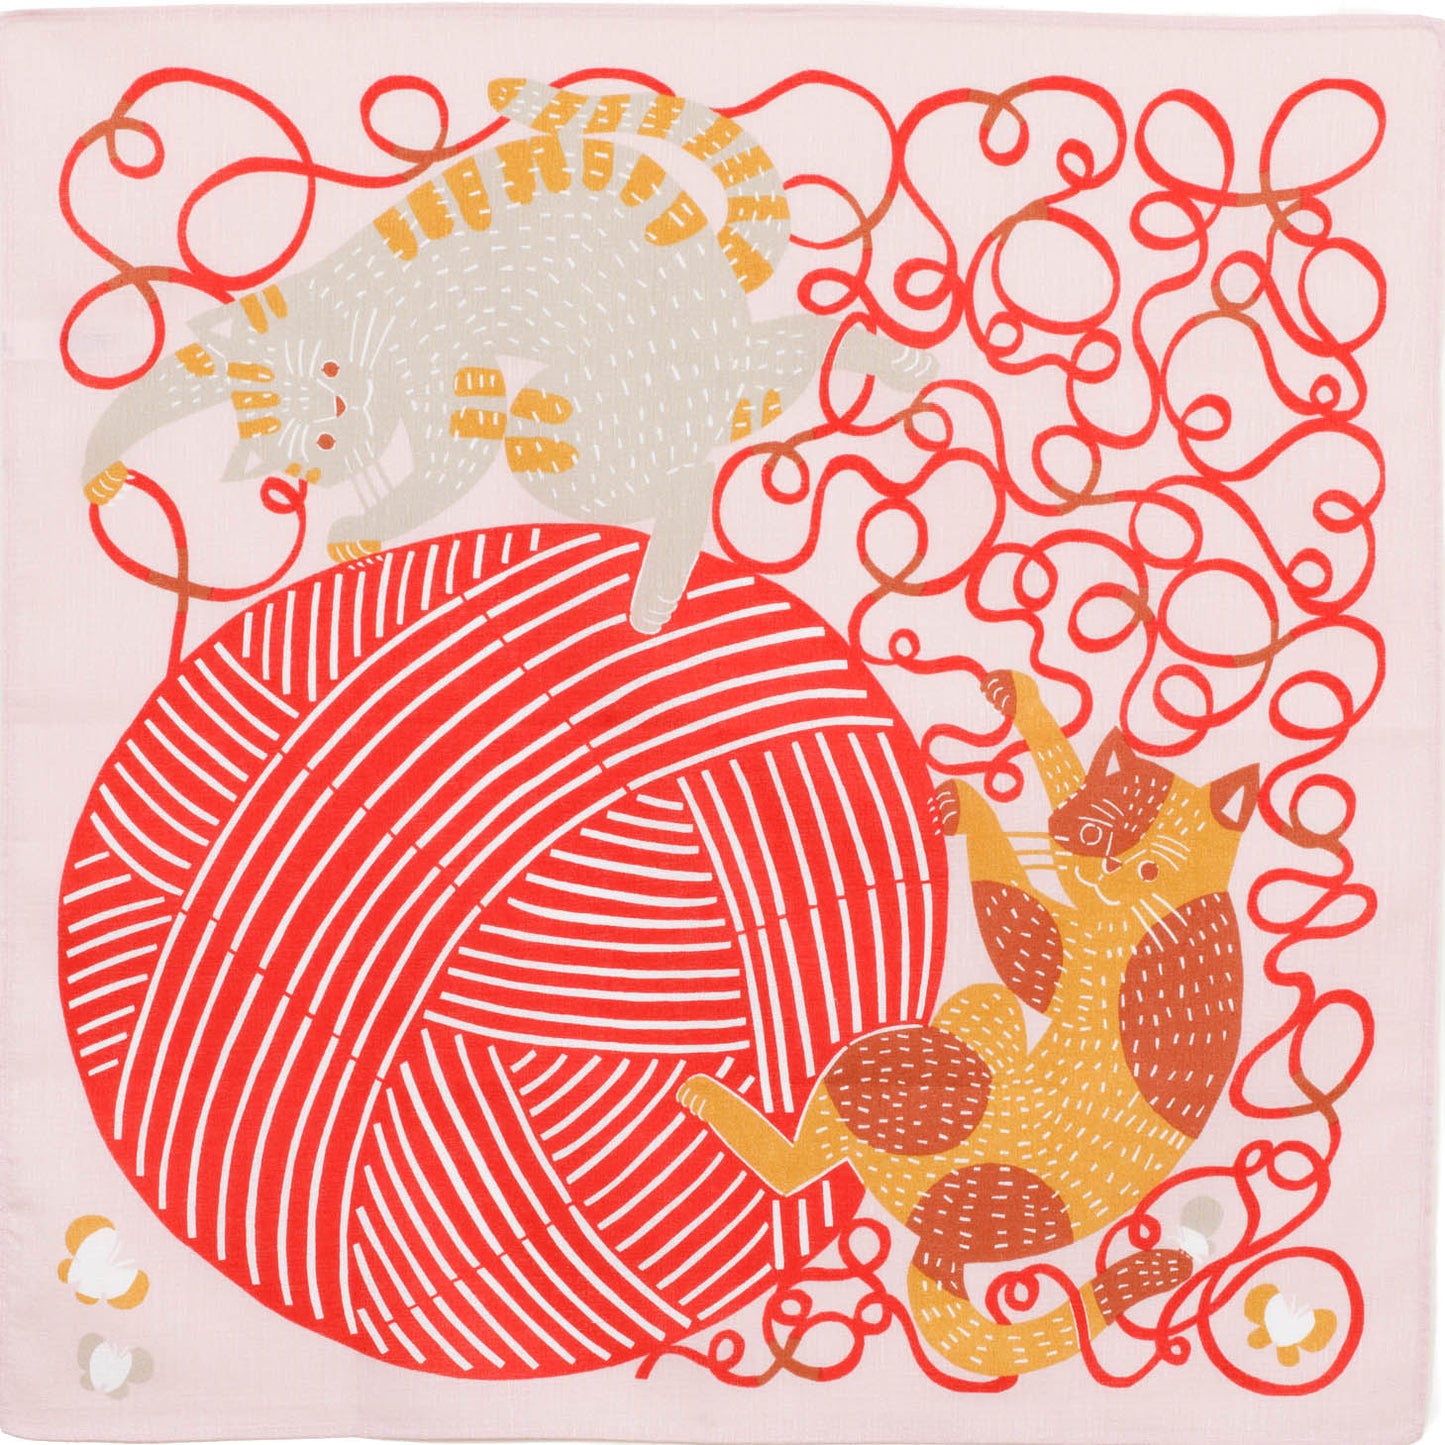 kata kata Furoshiki 50cm | Cat & Yarn (Pink)